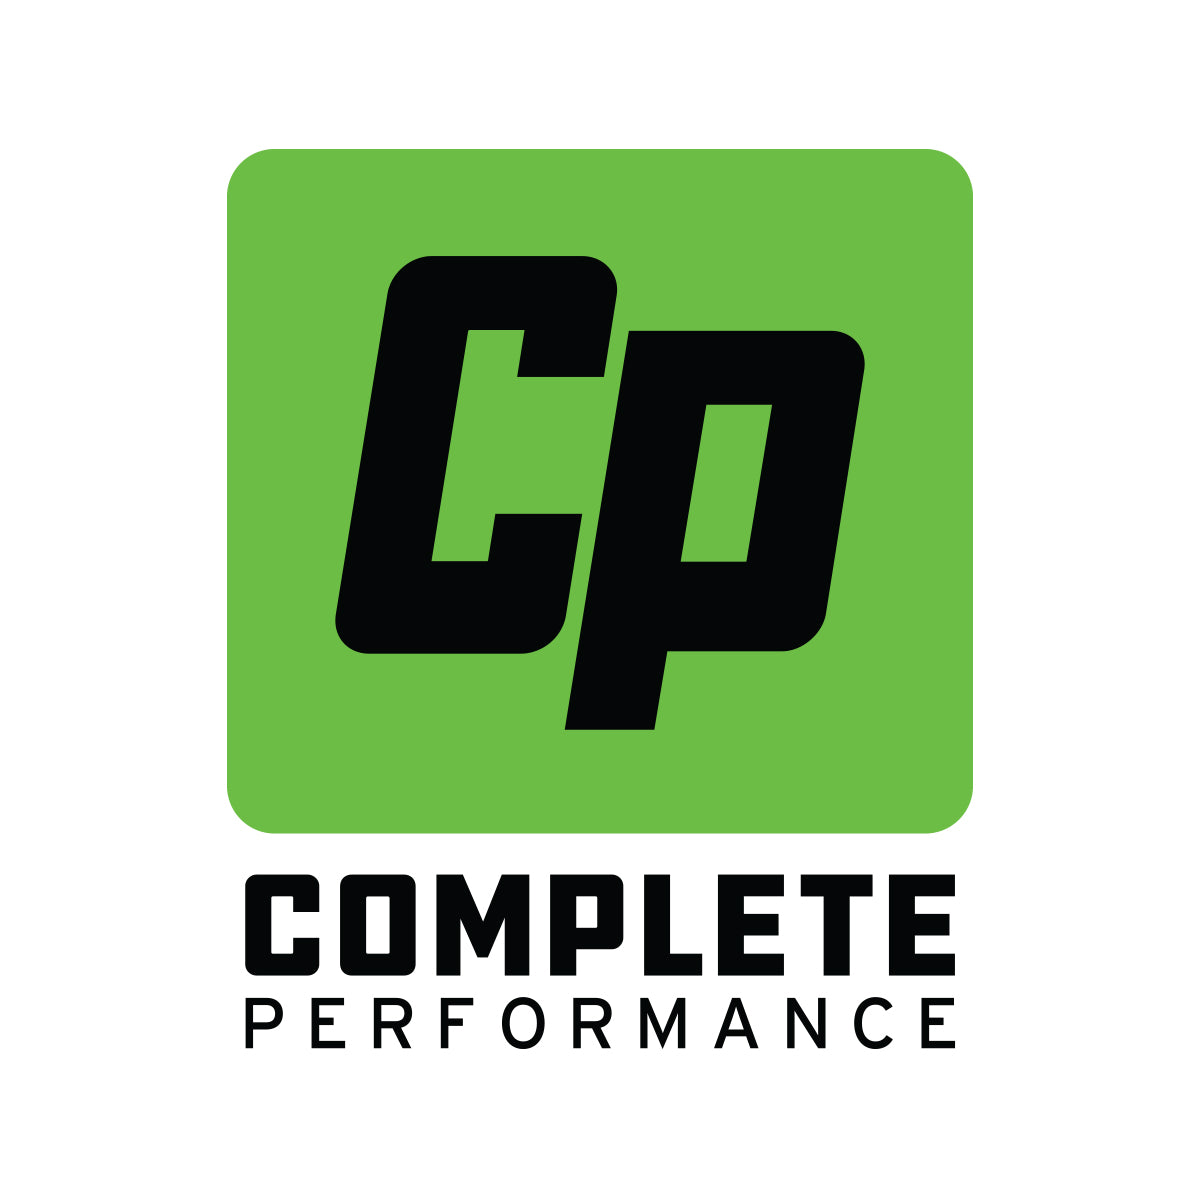 Complete Performance Decal - (Die Cut)